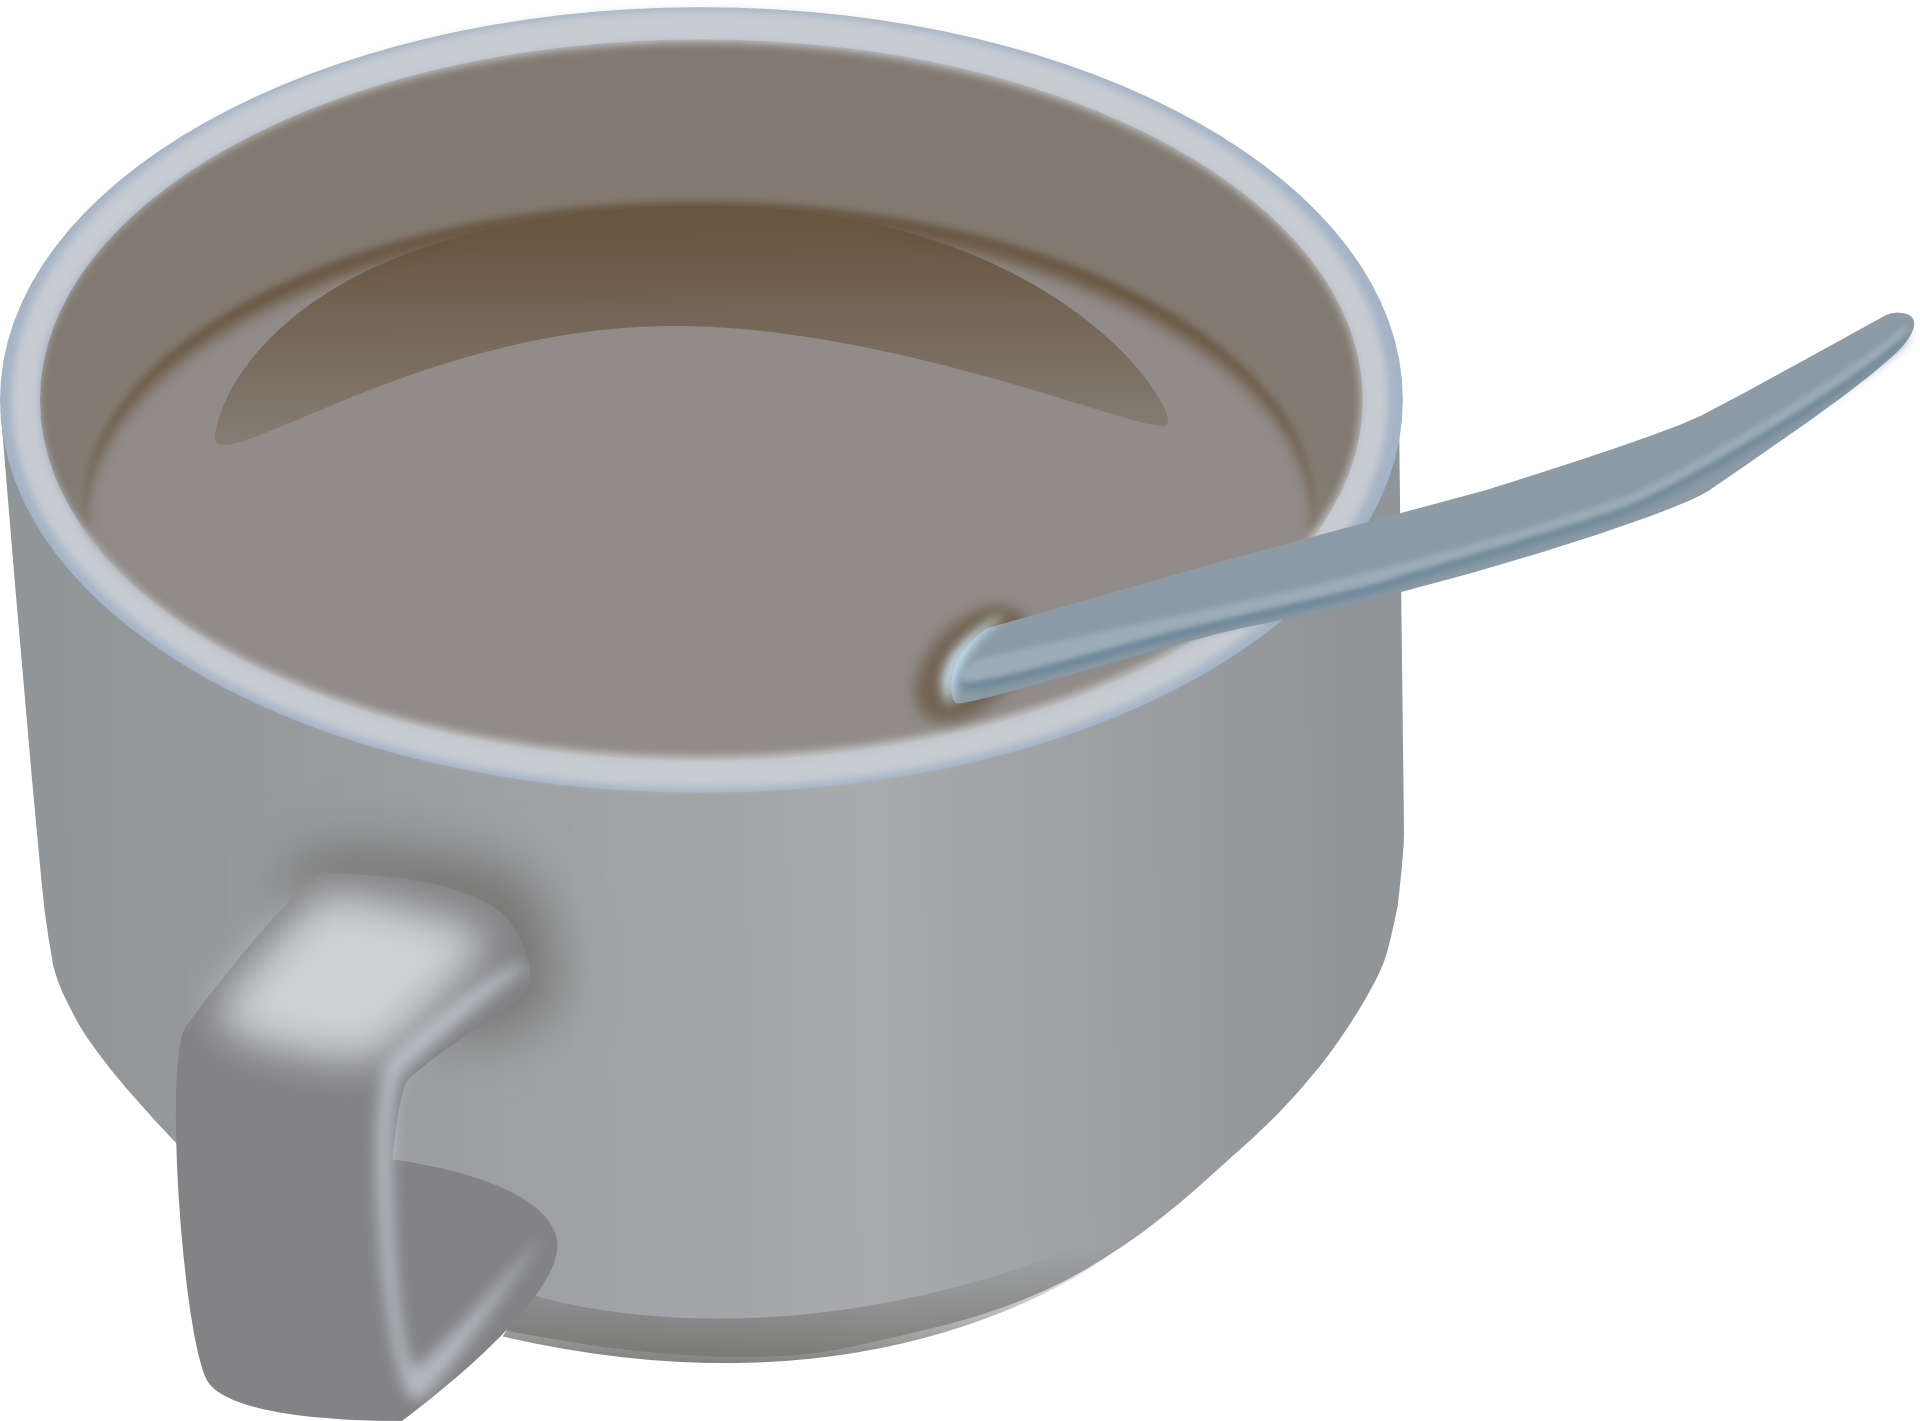 Coffee & Coffee Cup(Free Vector)